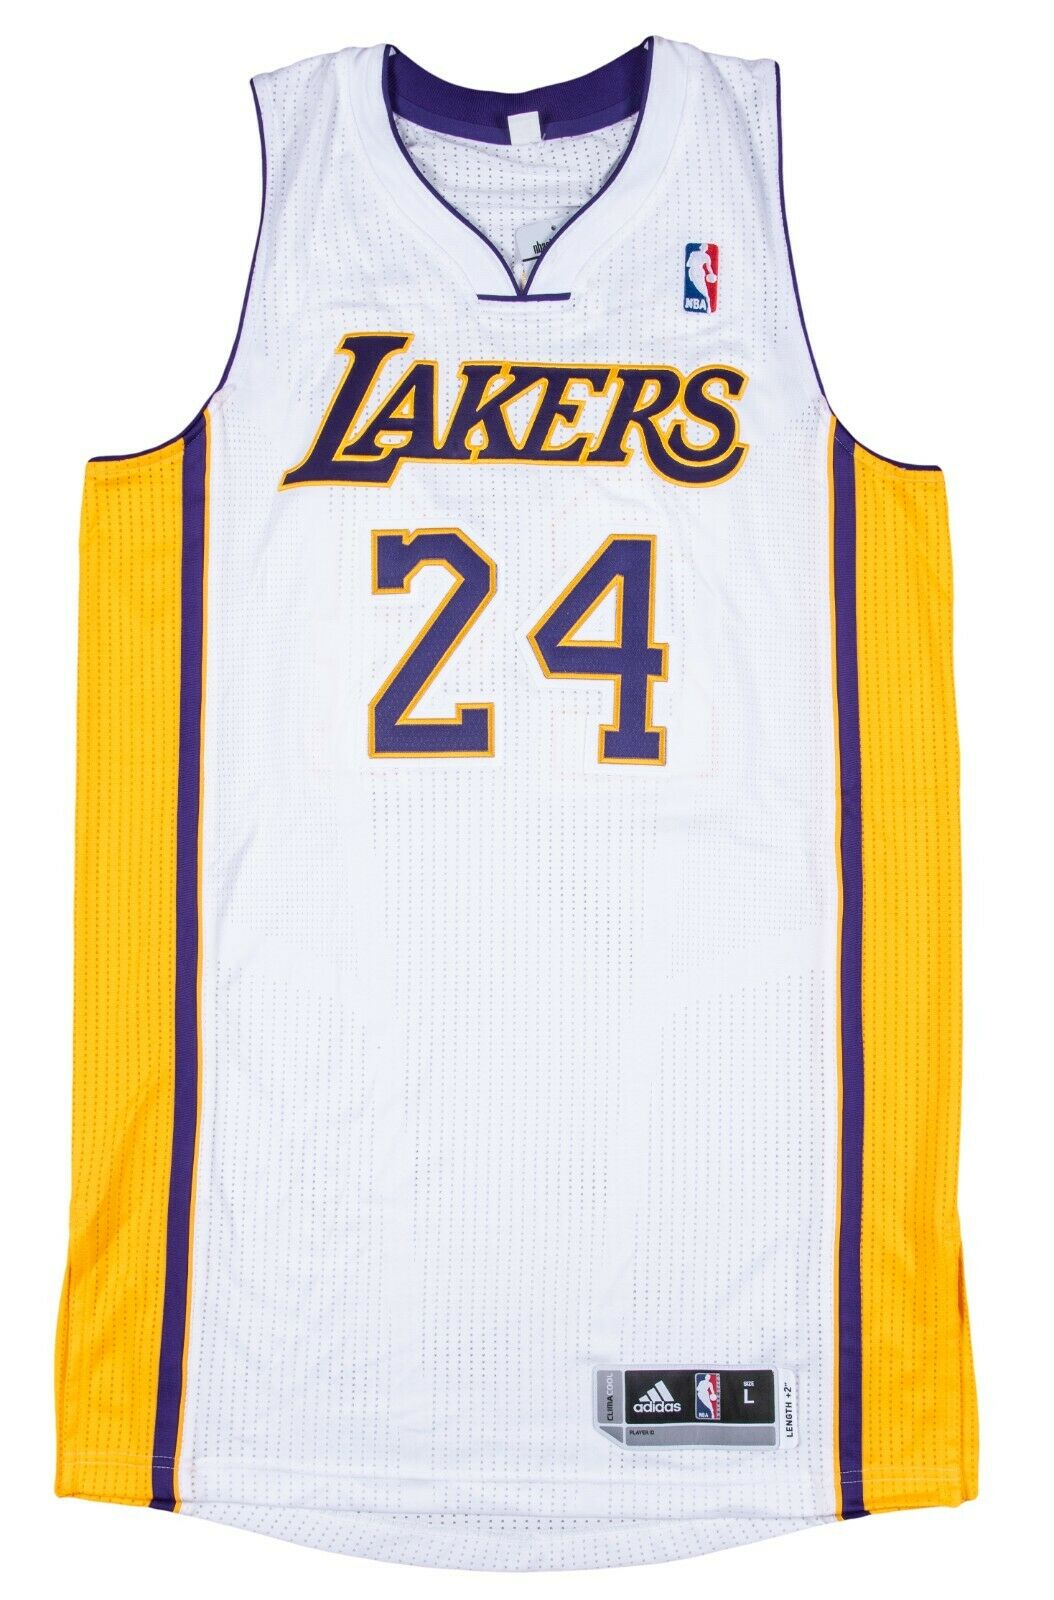 Los Angeles Lakers Lakers Kobe Bryant Black Net Adidas Shirt New tag